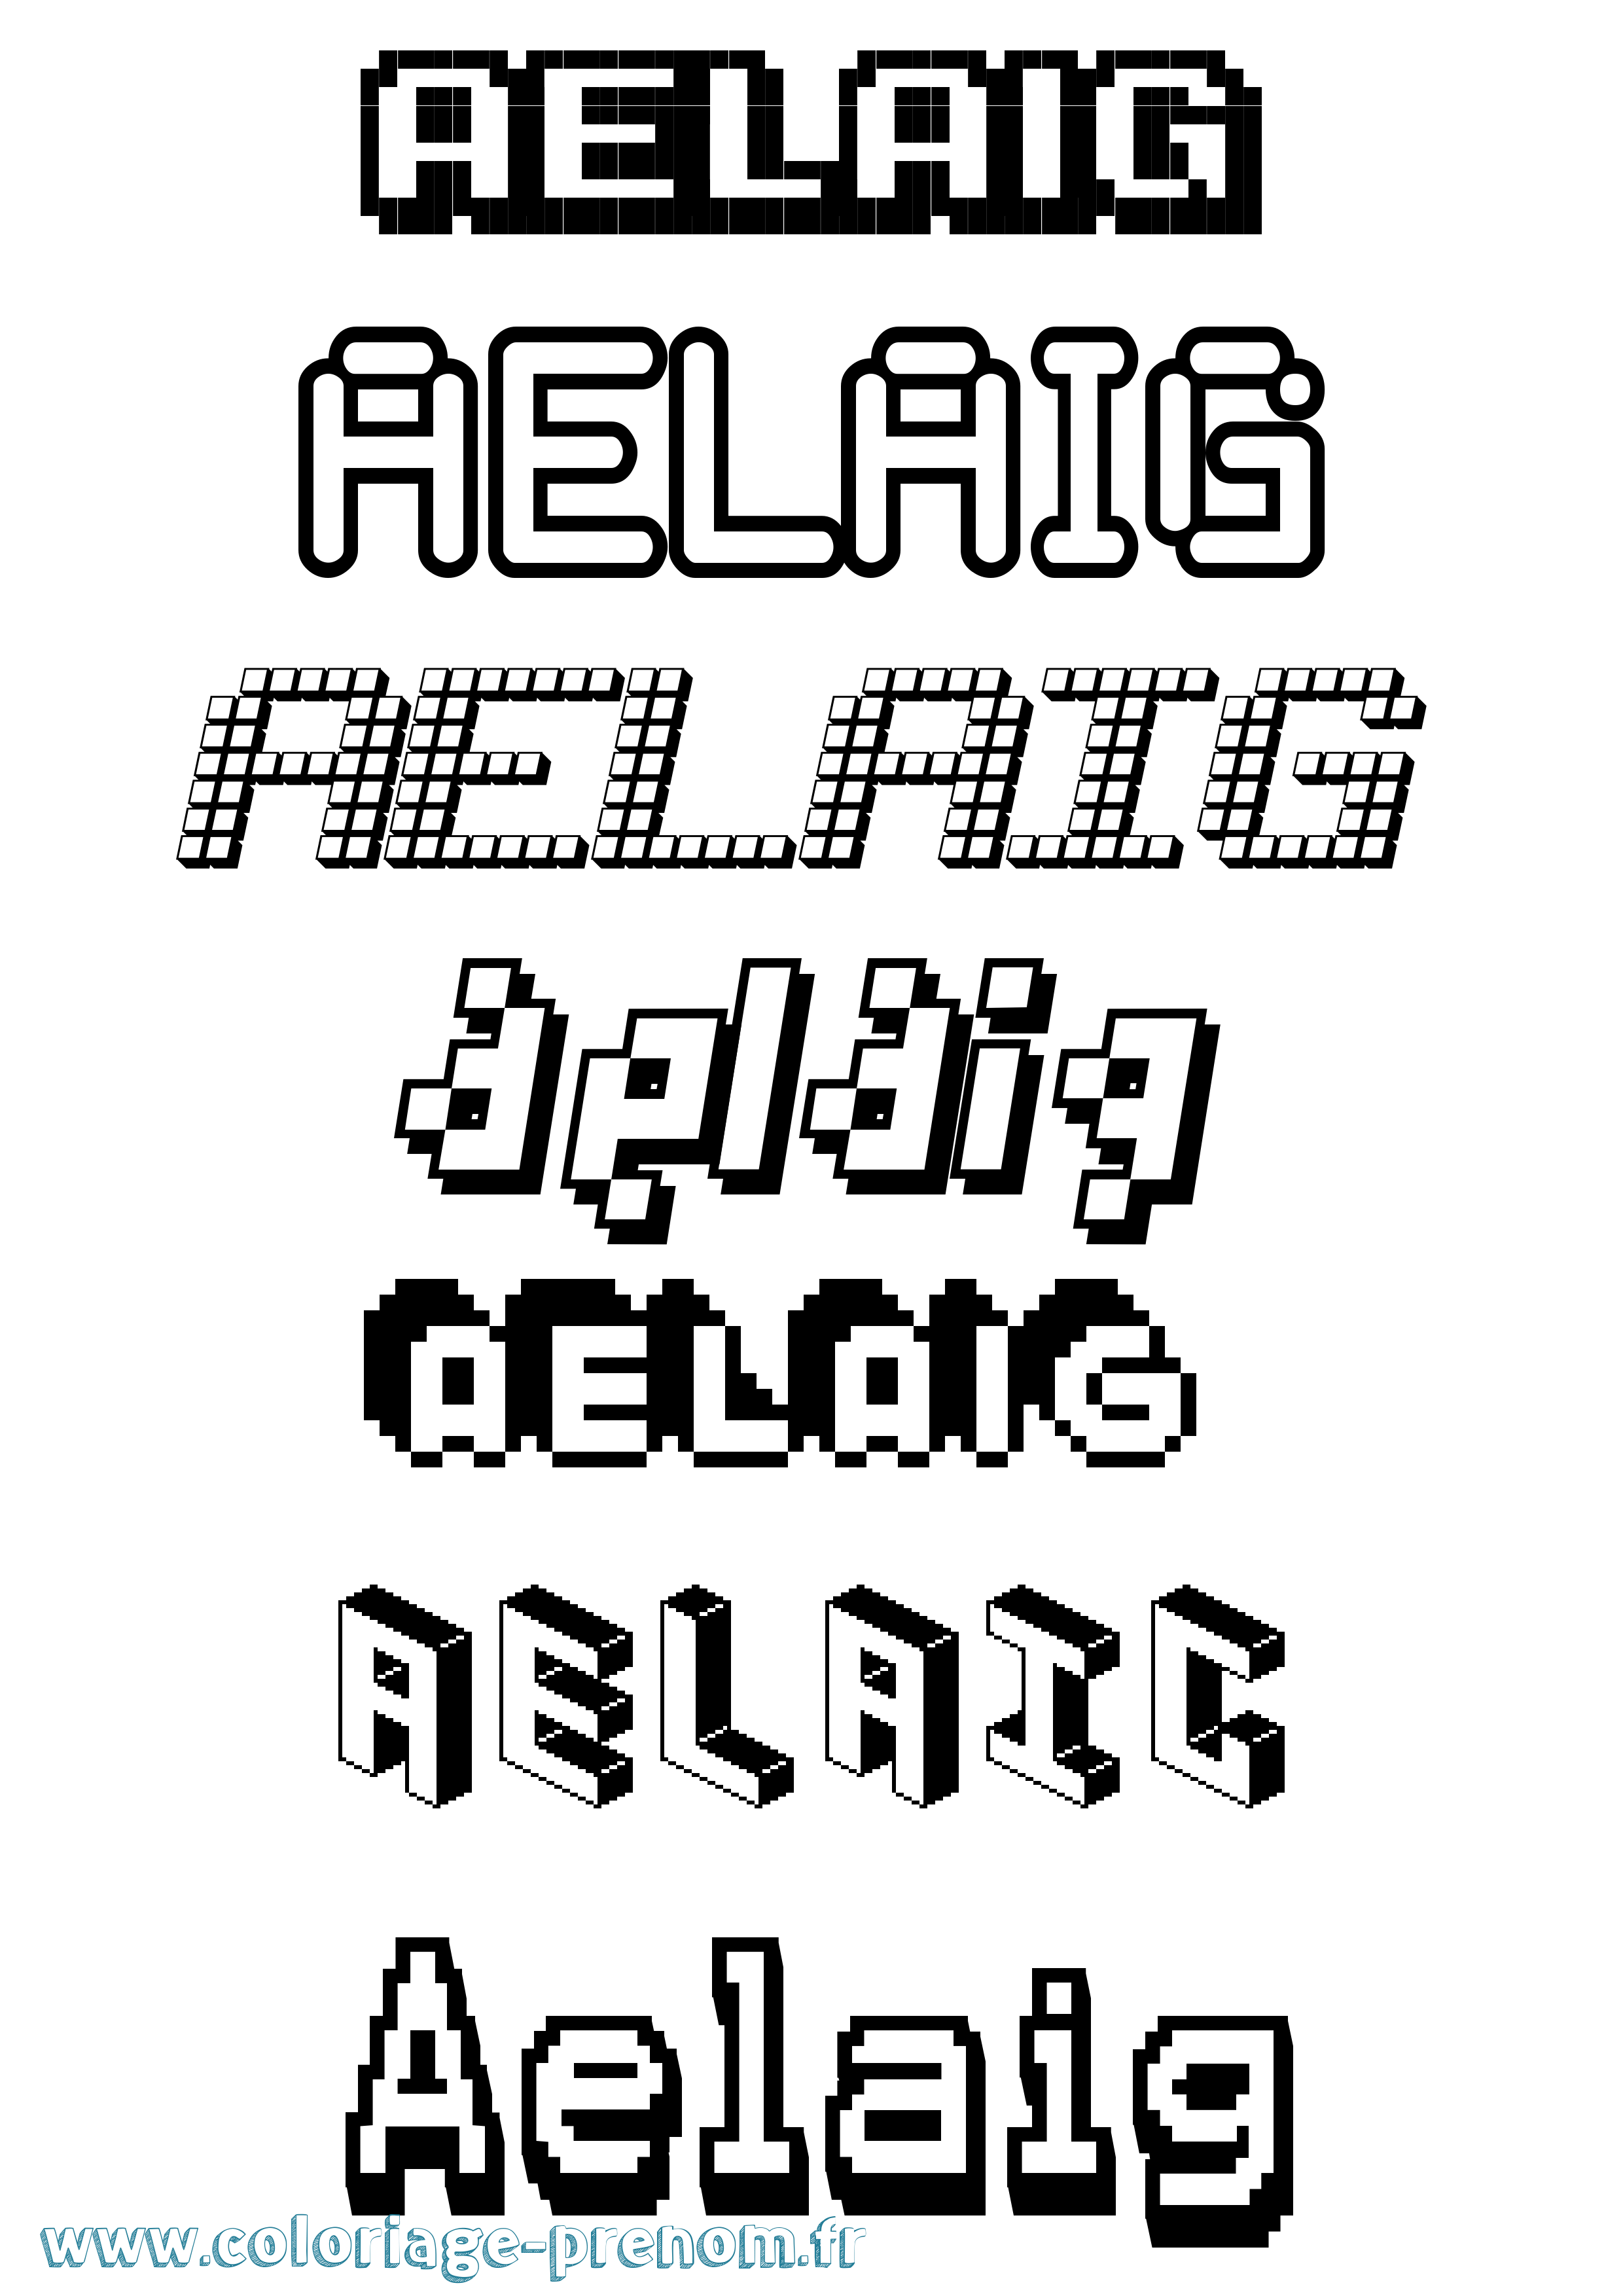 Coloriage prénom Aelaig Pixel